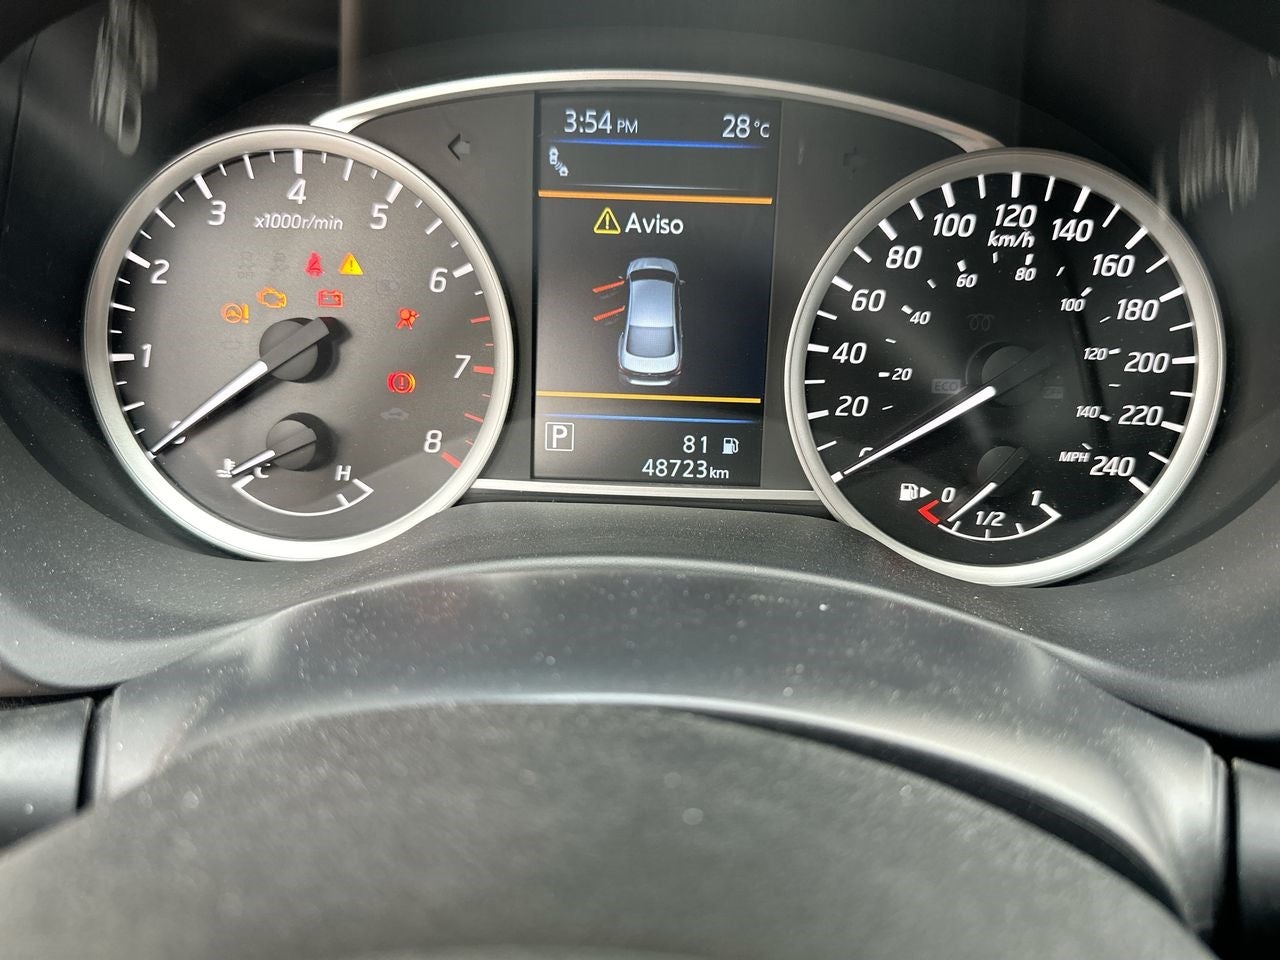 2019 Nissan SENTRA 4 PTS EXCLUSIVE CVT AAC AUT GPS PIEL QC F LED RA-17